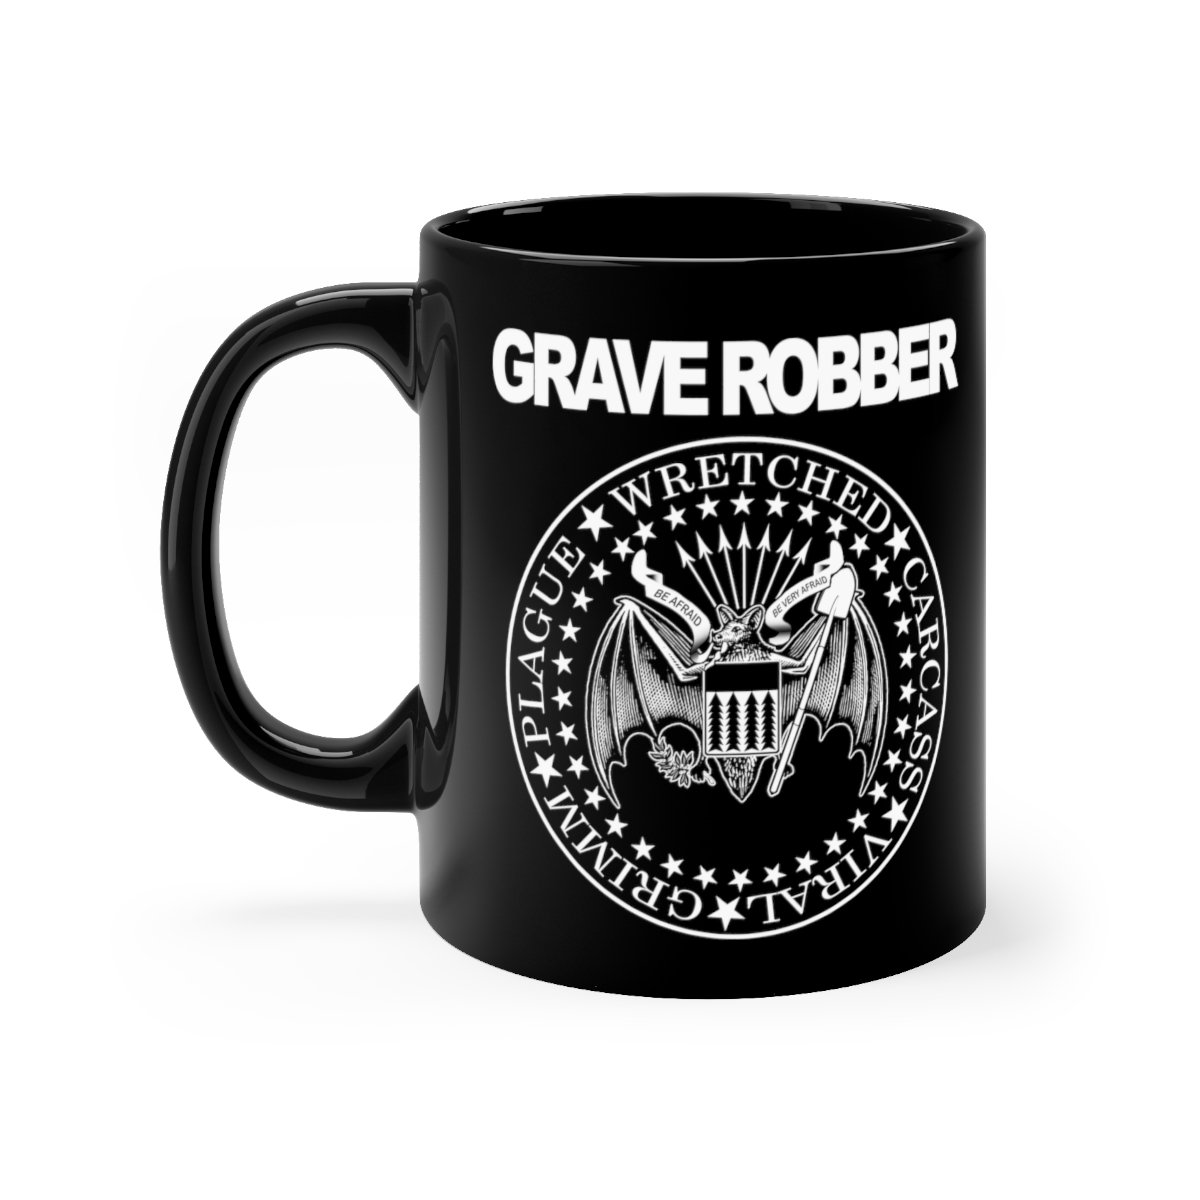 Grave Robber Hey Ho Let’s Whoa Black mug 11oz